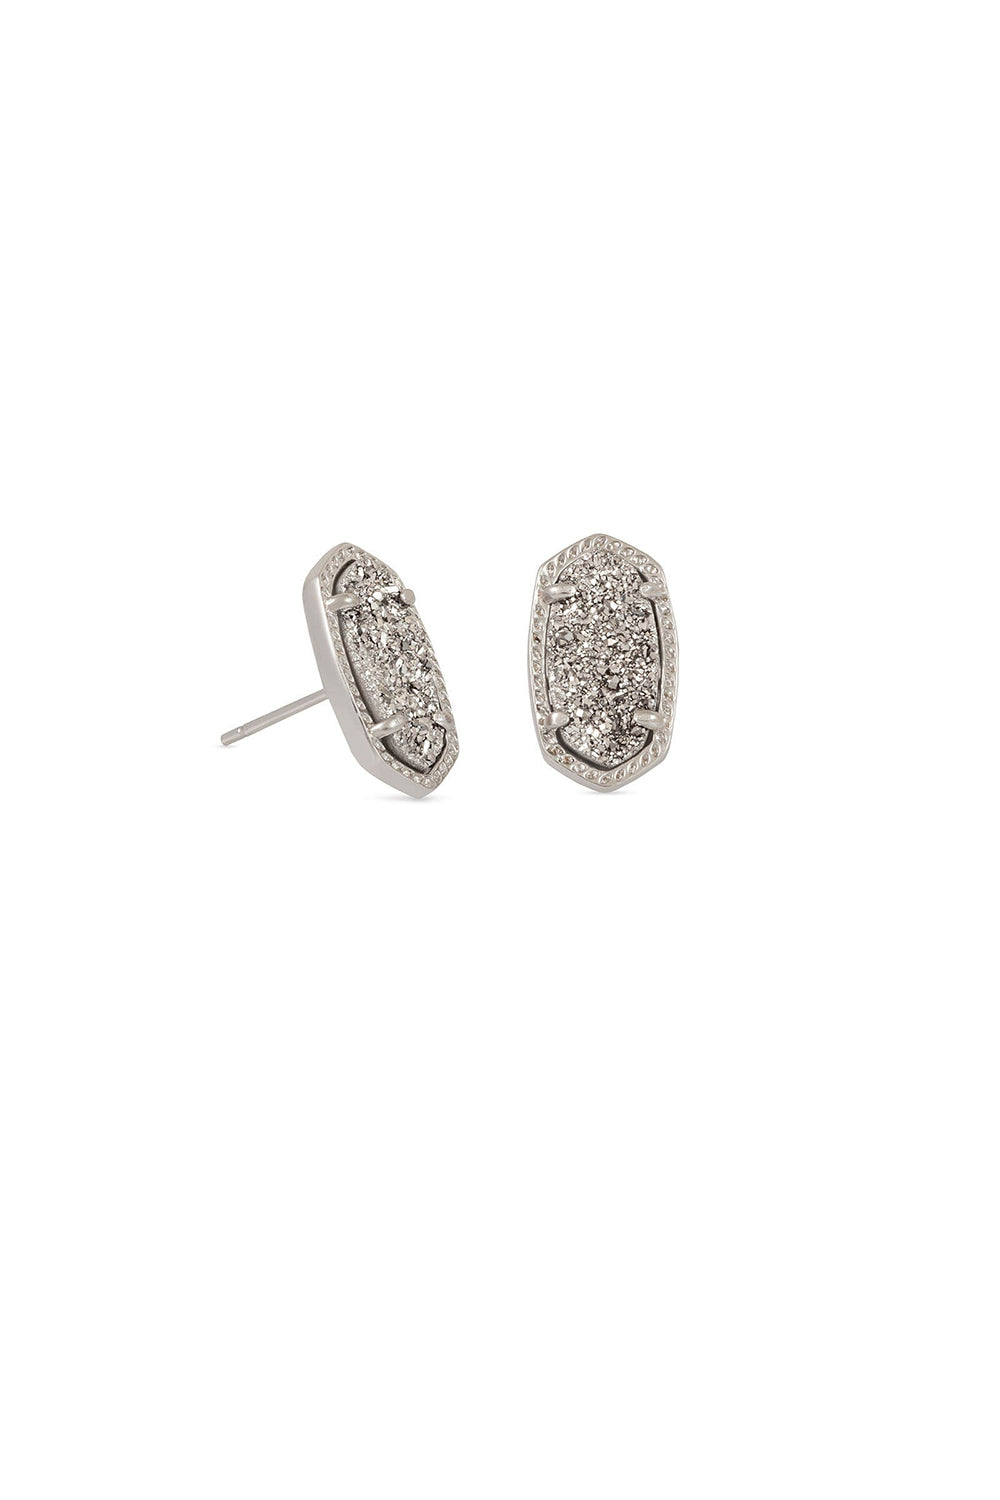 Kendra Scott: Ellie Silver Stud Earrings - Platinum Drusy | Makk Fashions